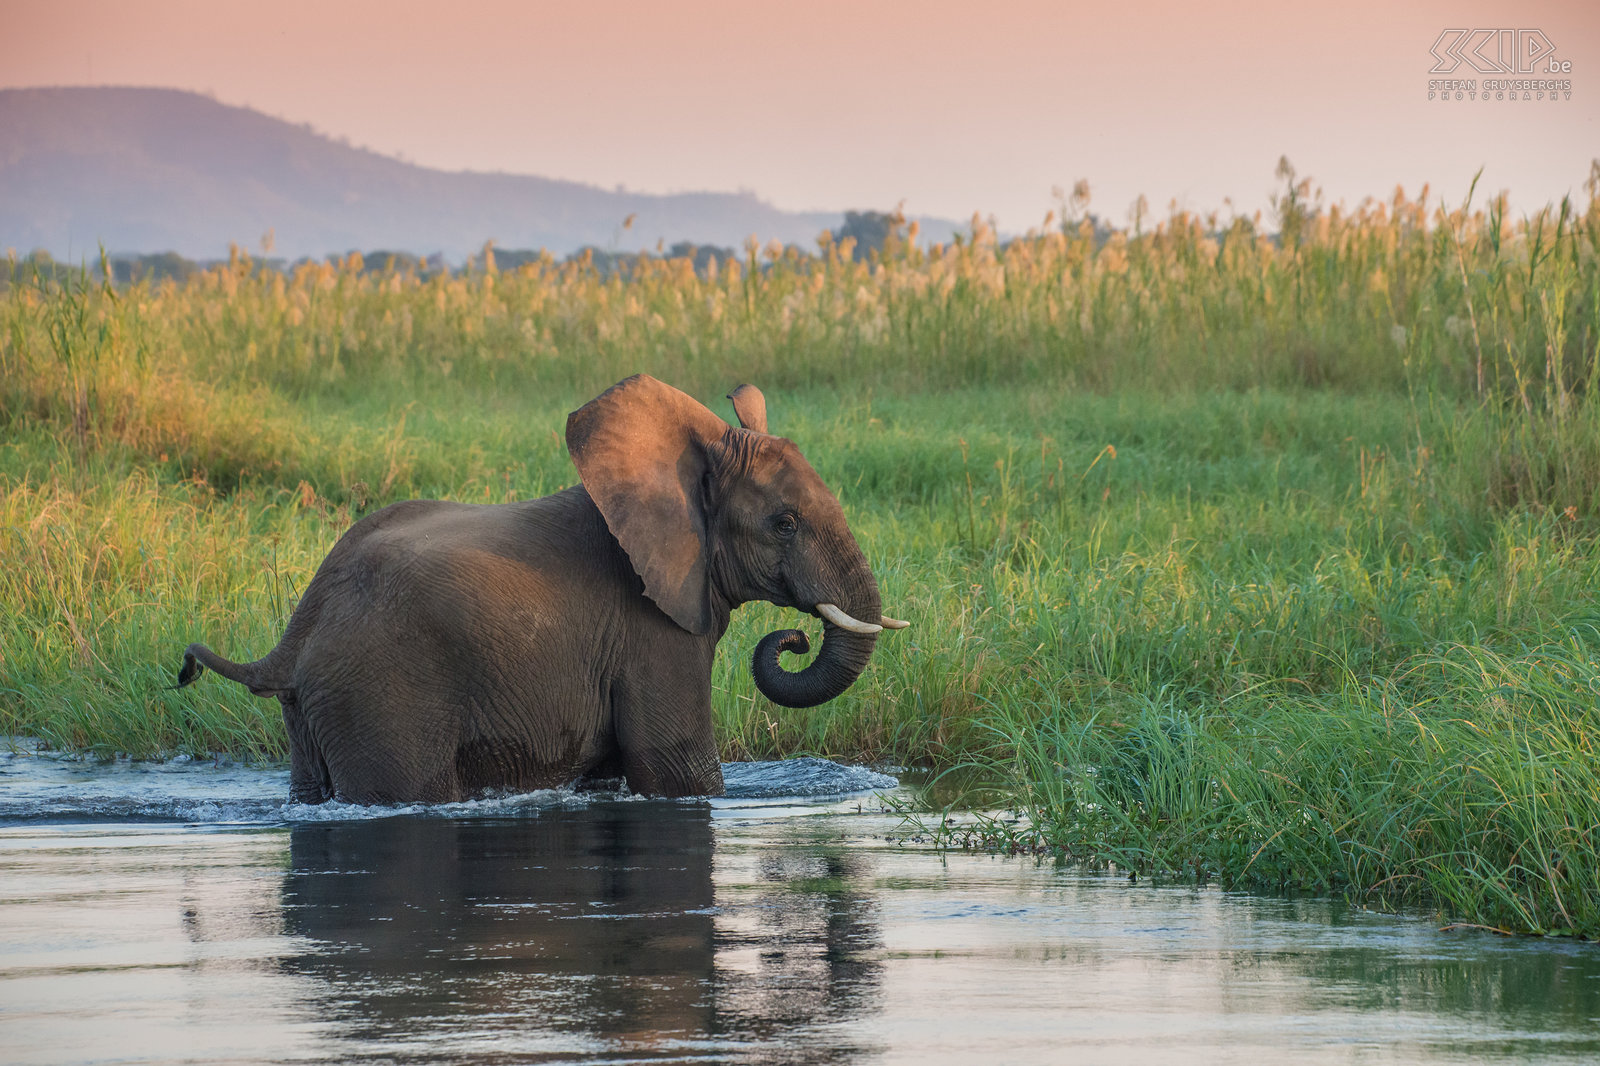 Lower Zambezi - Elephant A young elephant wading through the river Stefan Cruysberghs